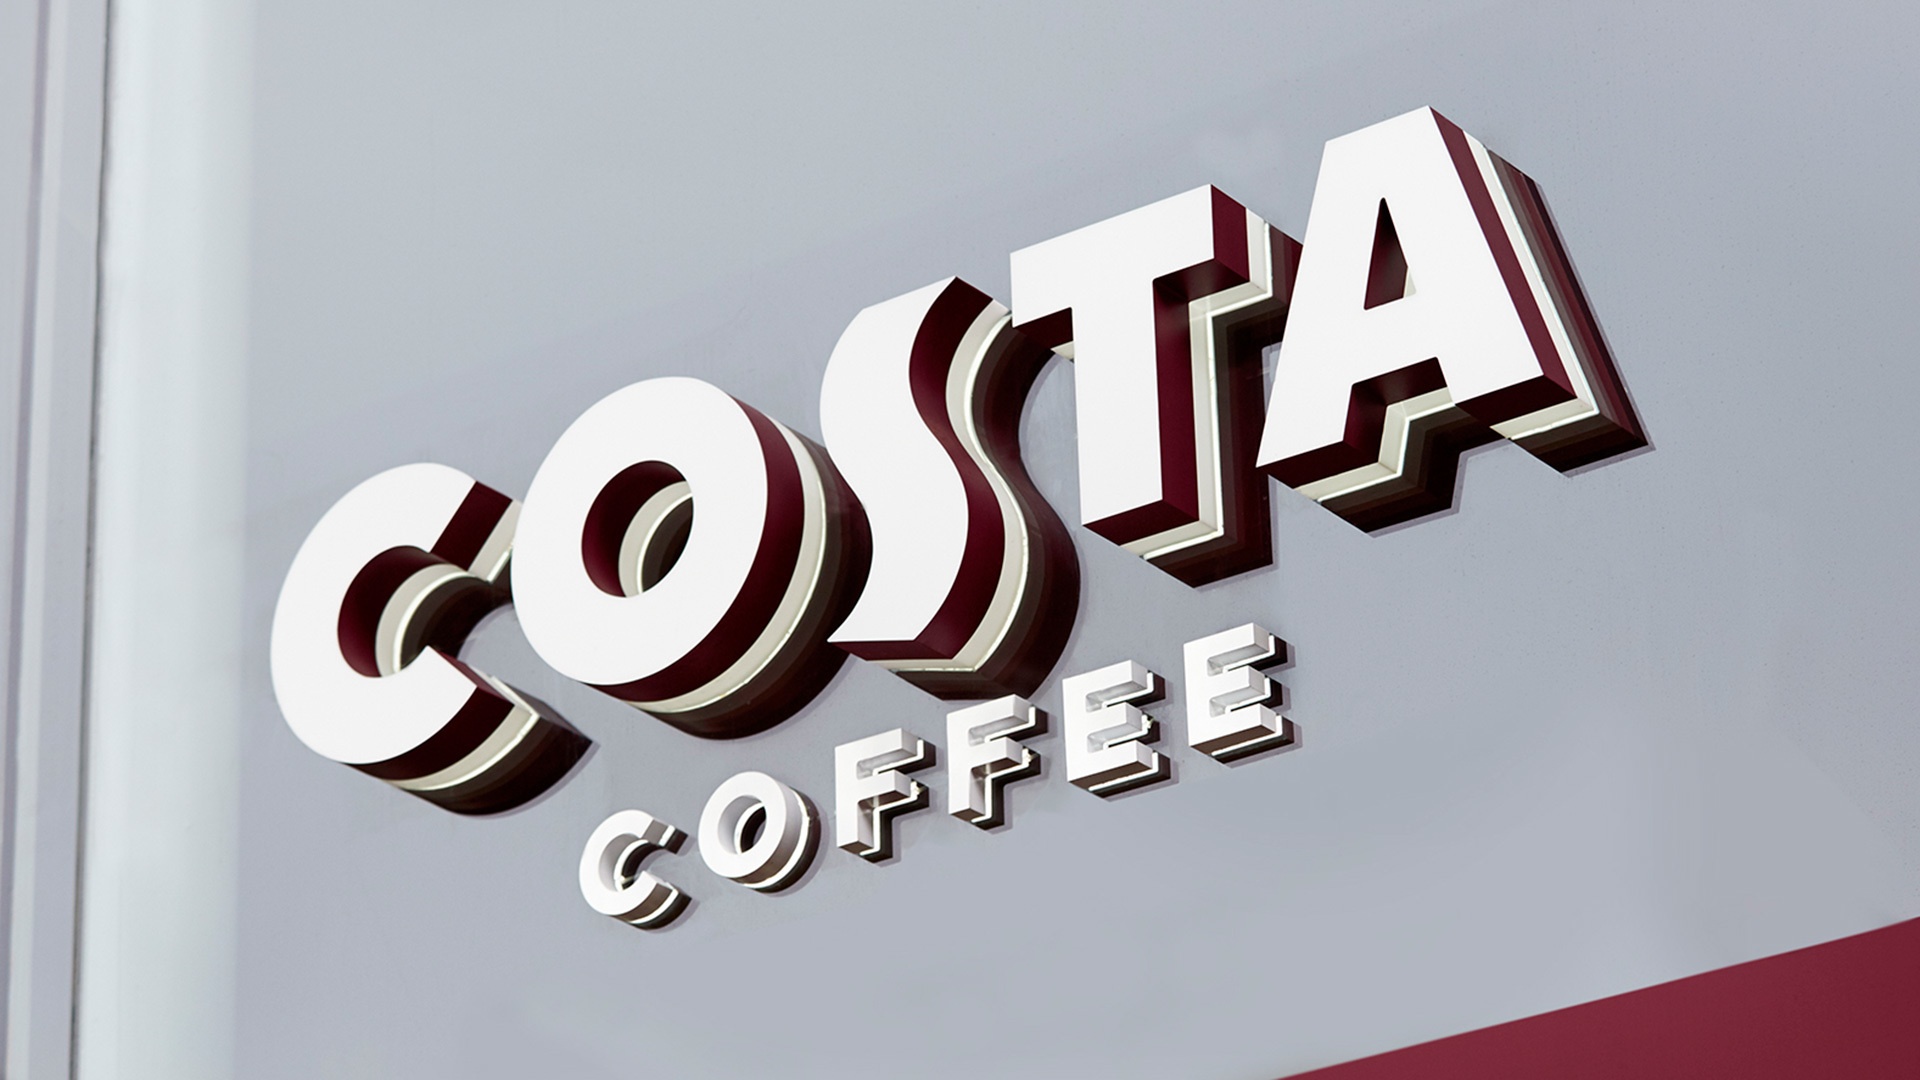 Costa SOTF Signage Wordmark